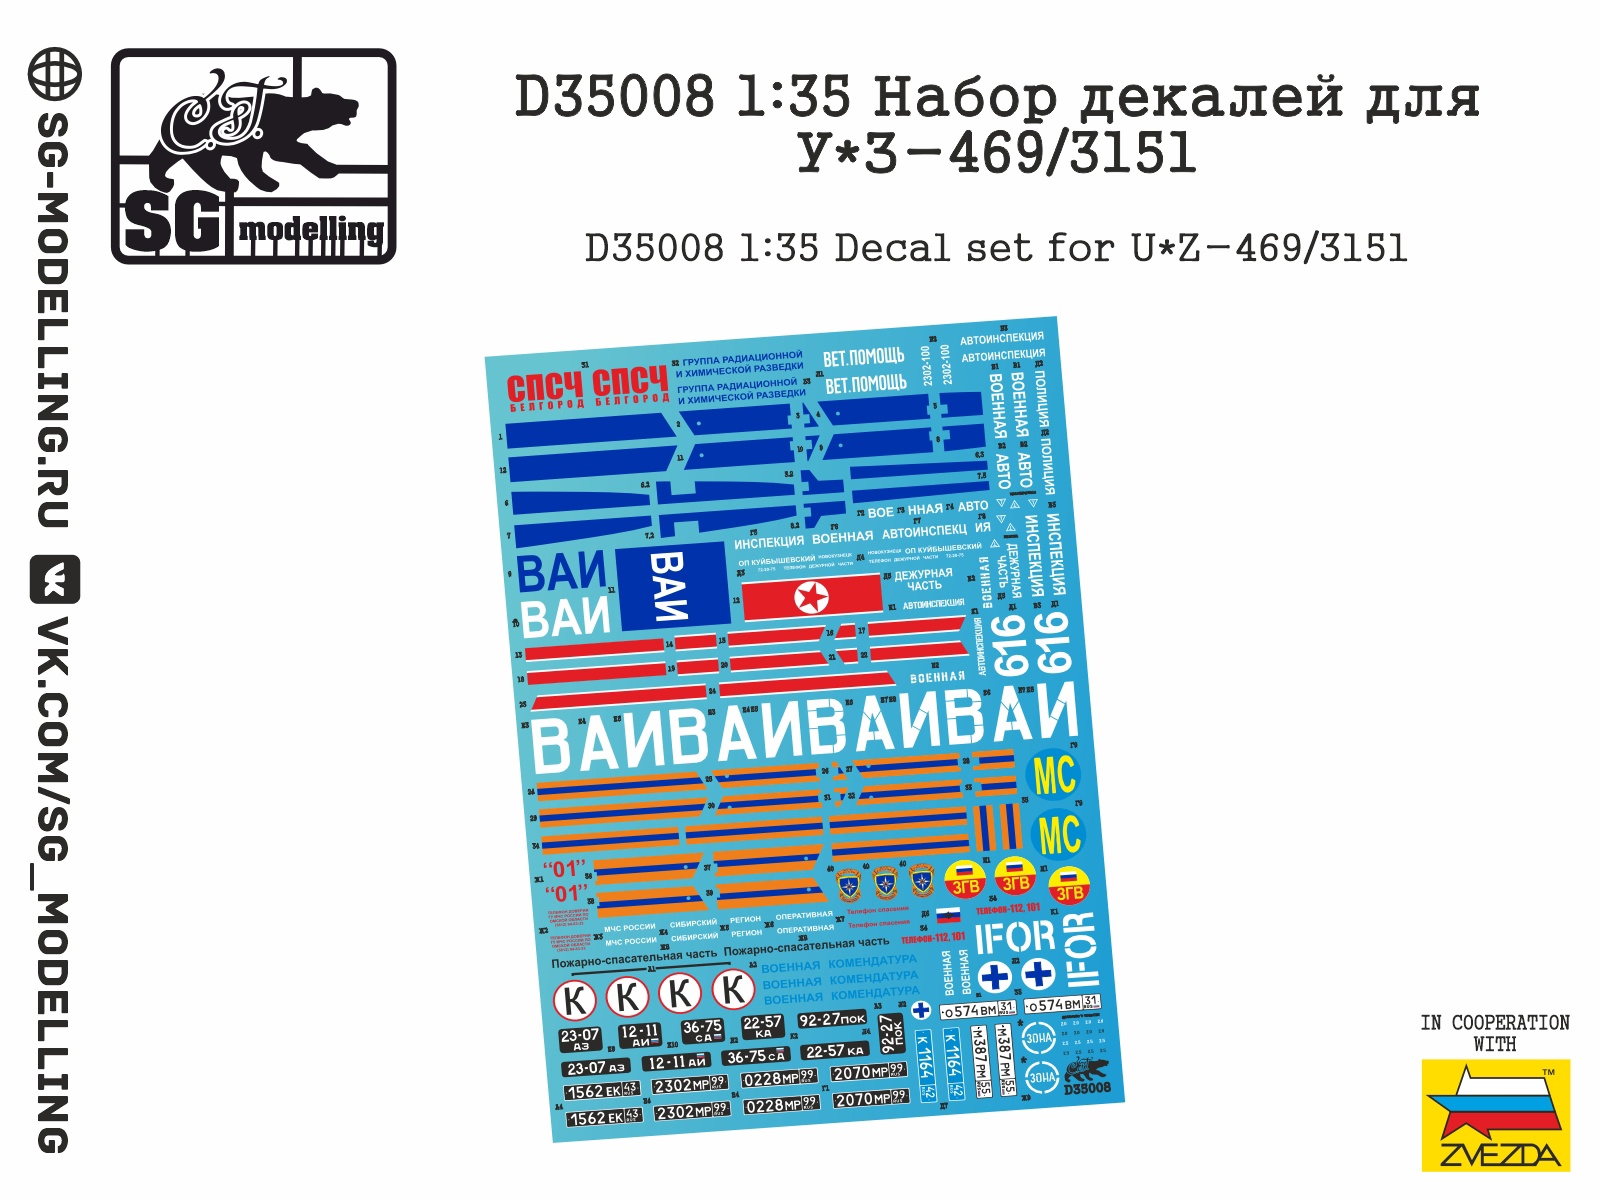 D35008  декали  Набор декалей для У*З-469/3151  (1:35)